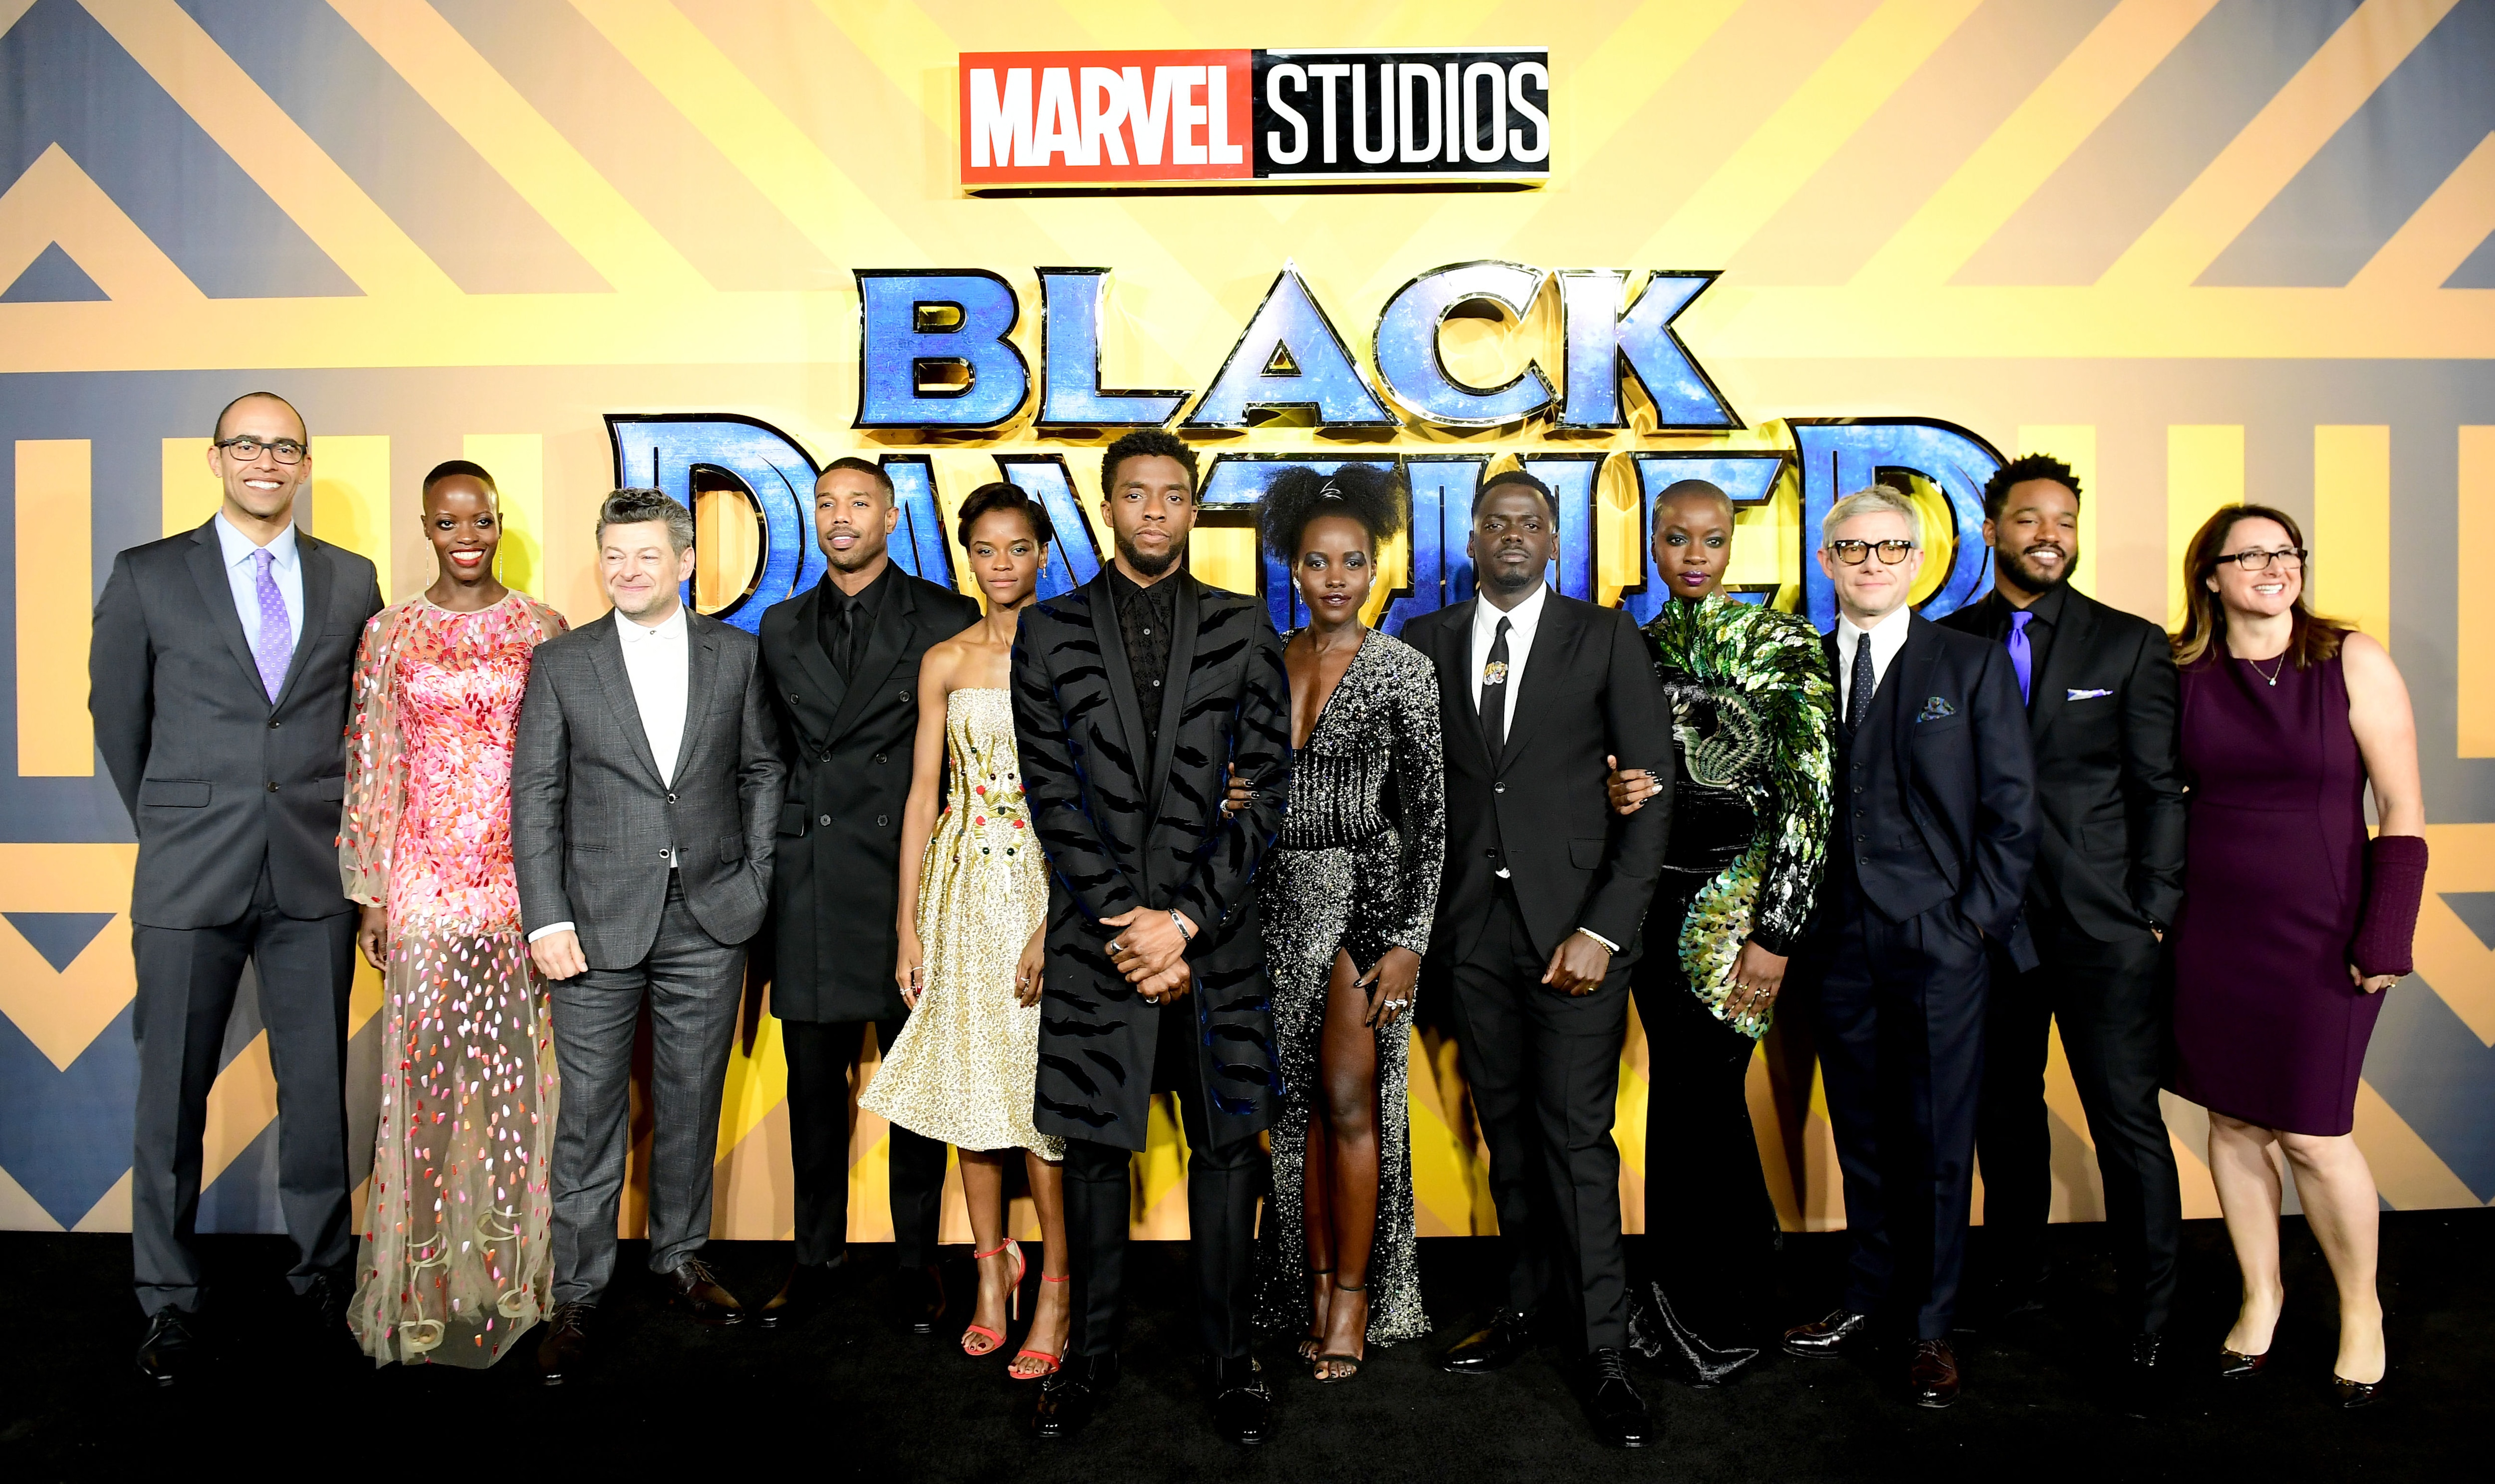 Black Panther premiere cast - Getty